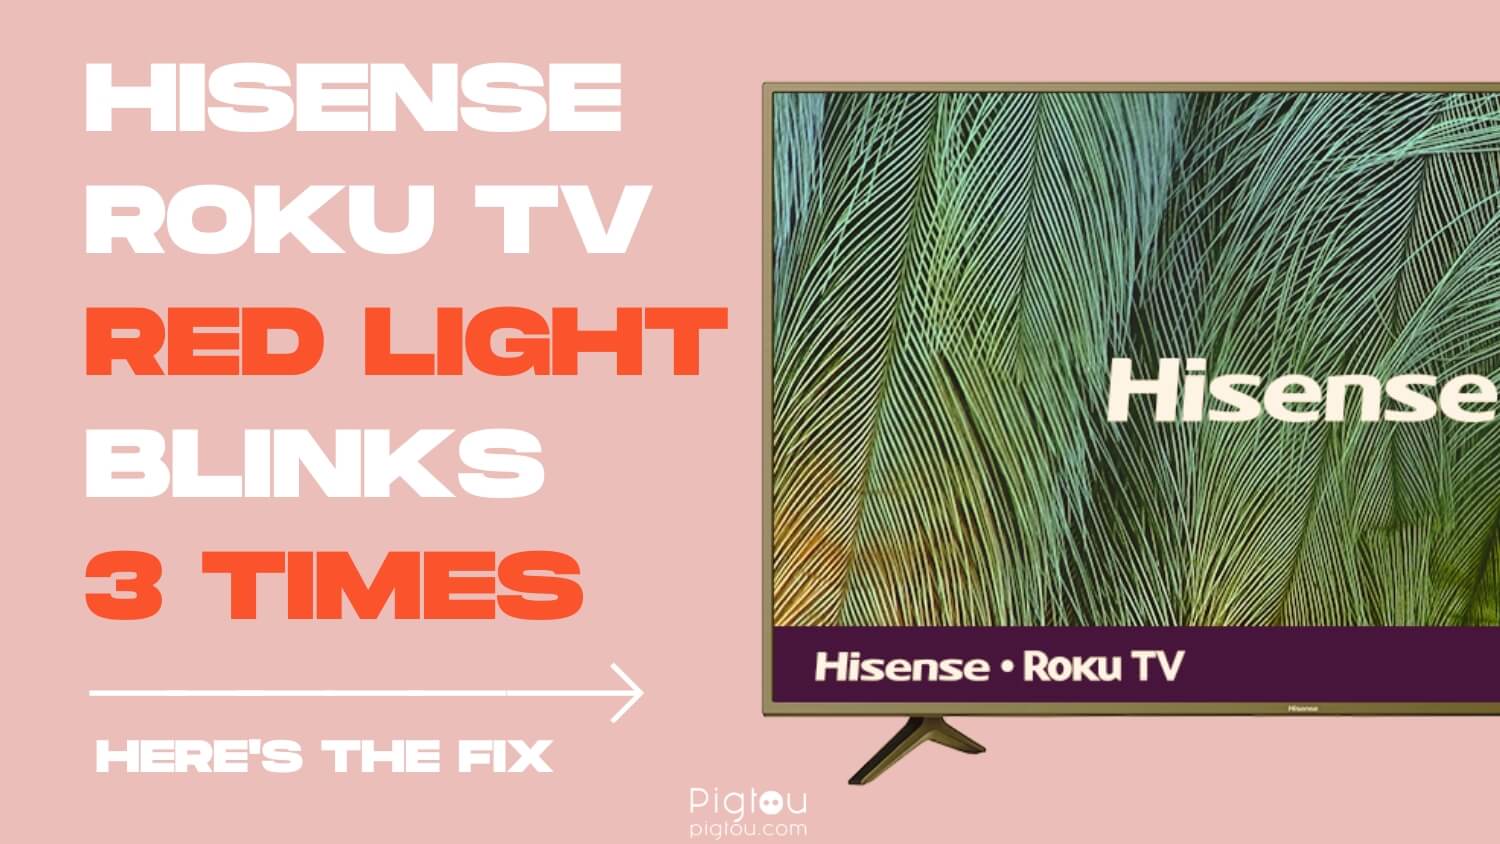 Hisense Roku TV Red Light Blinks 3 Times [REAL FIX]